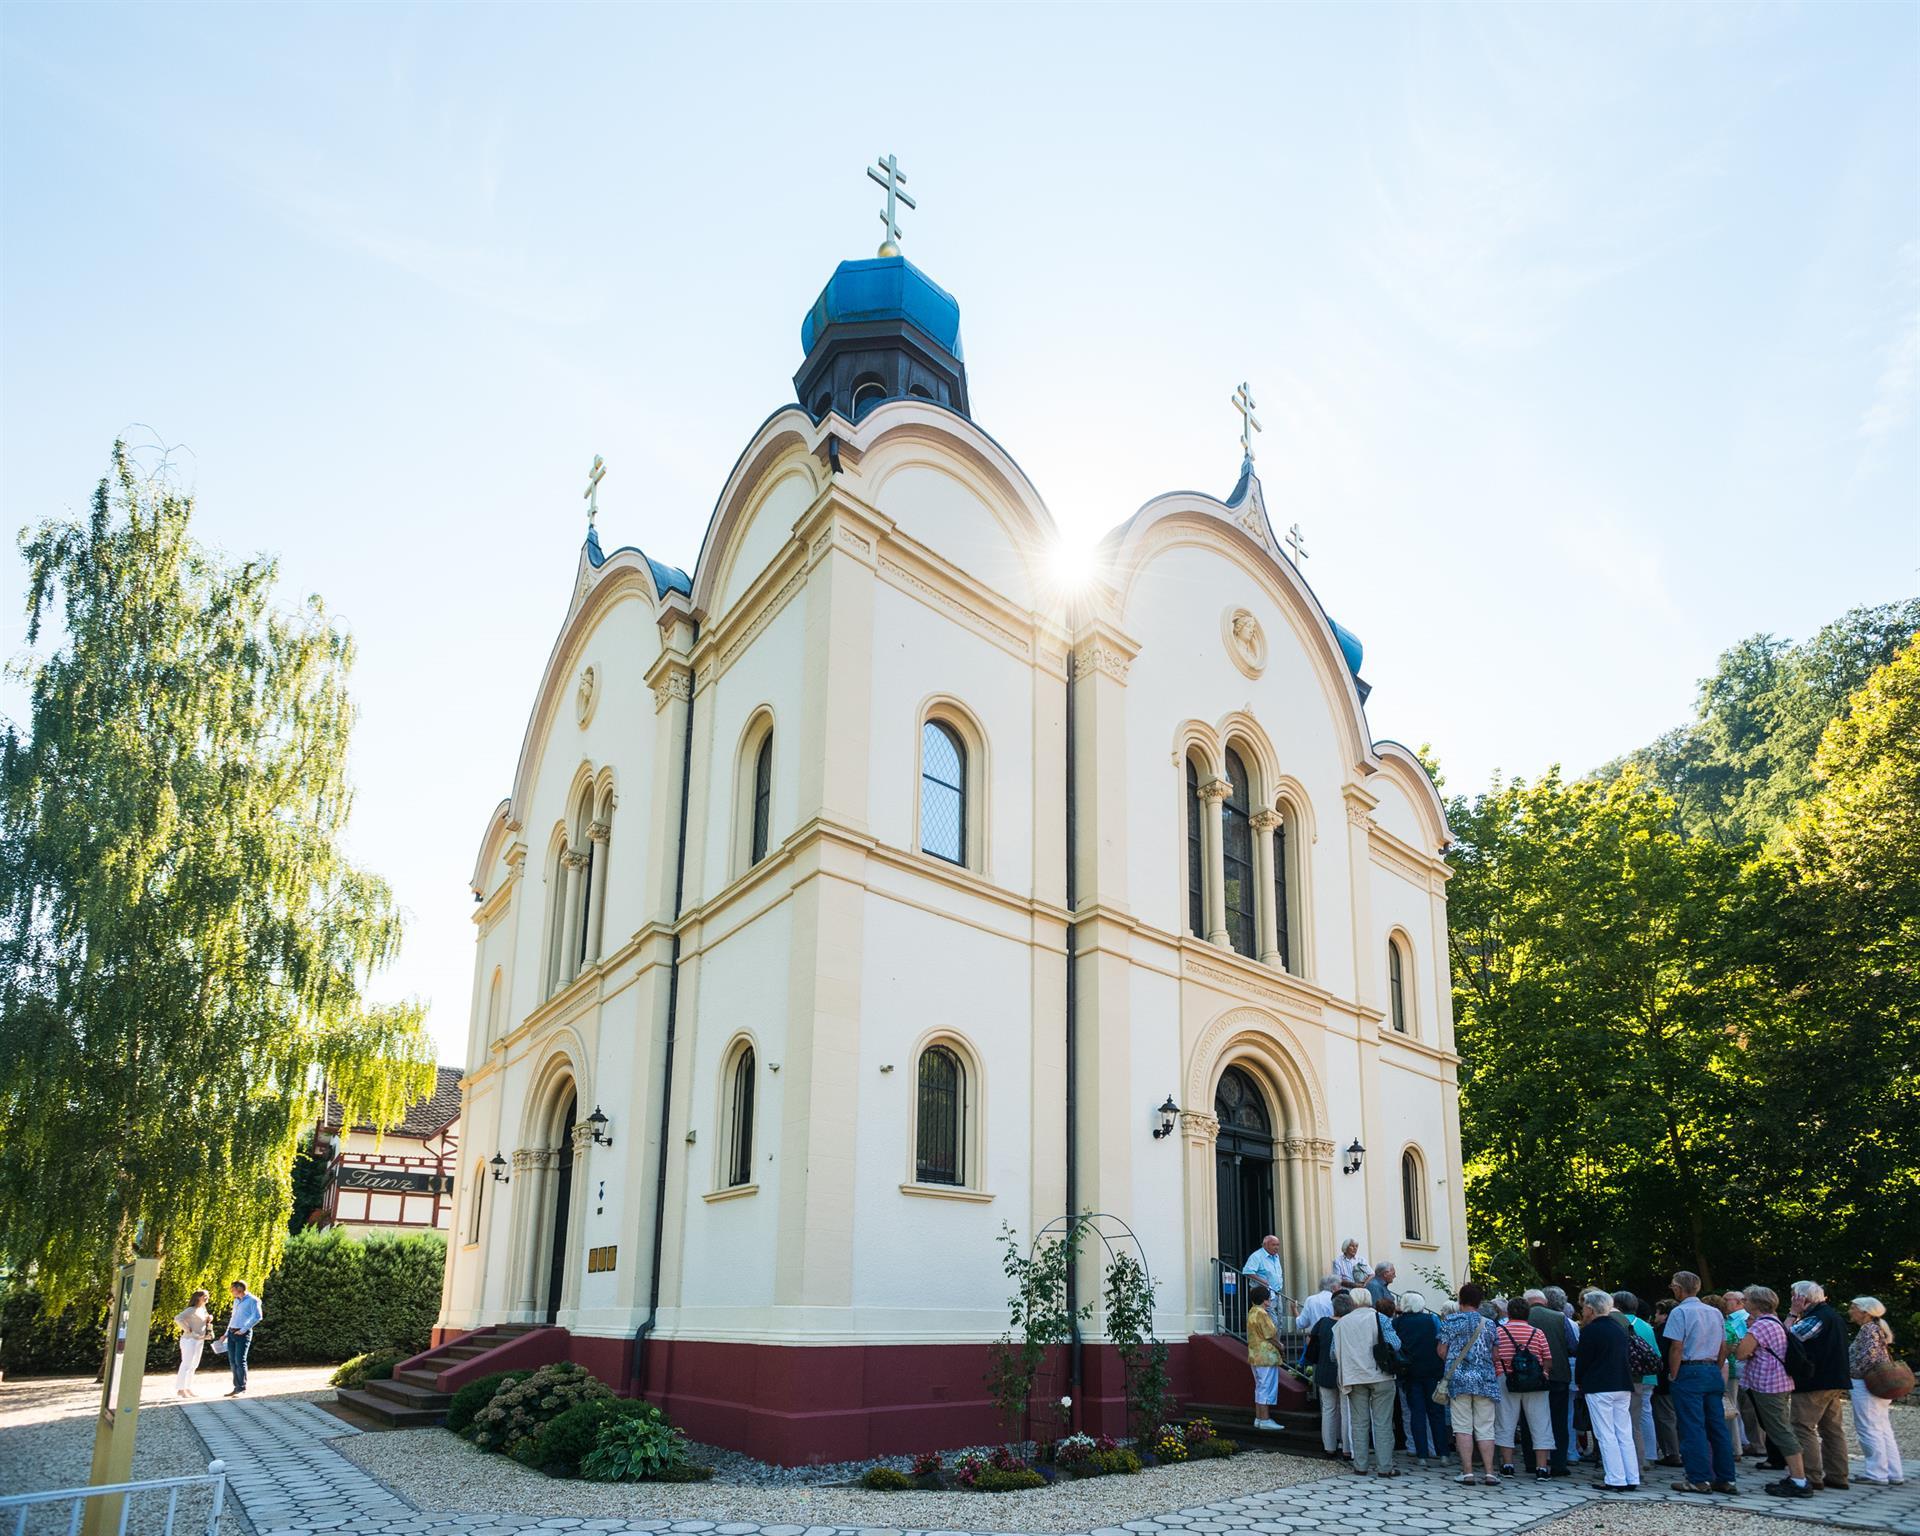 Russische Kirche Bad Ems